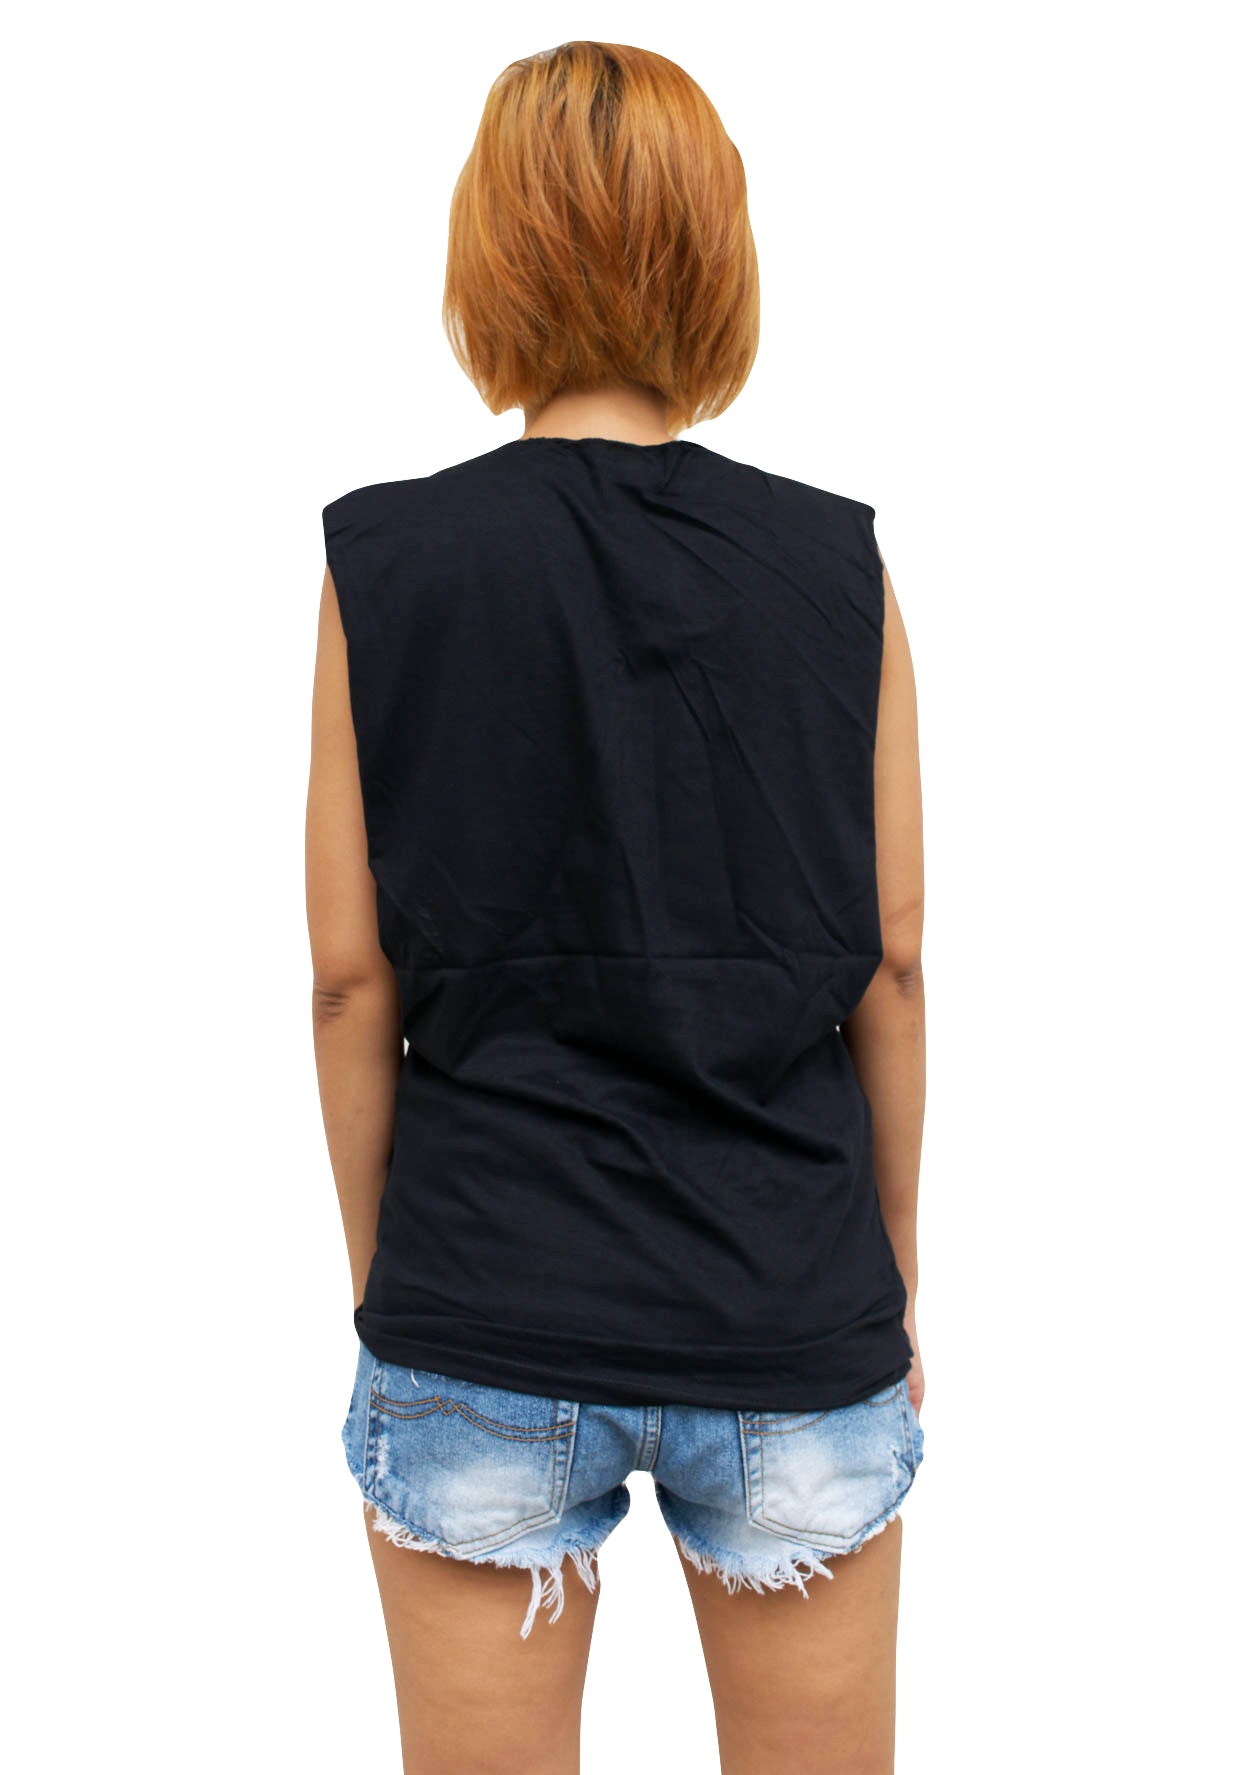 Ladies Creedence Clearwater Revival Vest Tank-Top Singlet Sleeveless T-Shirt